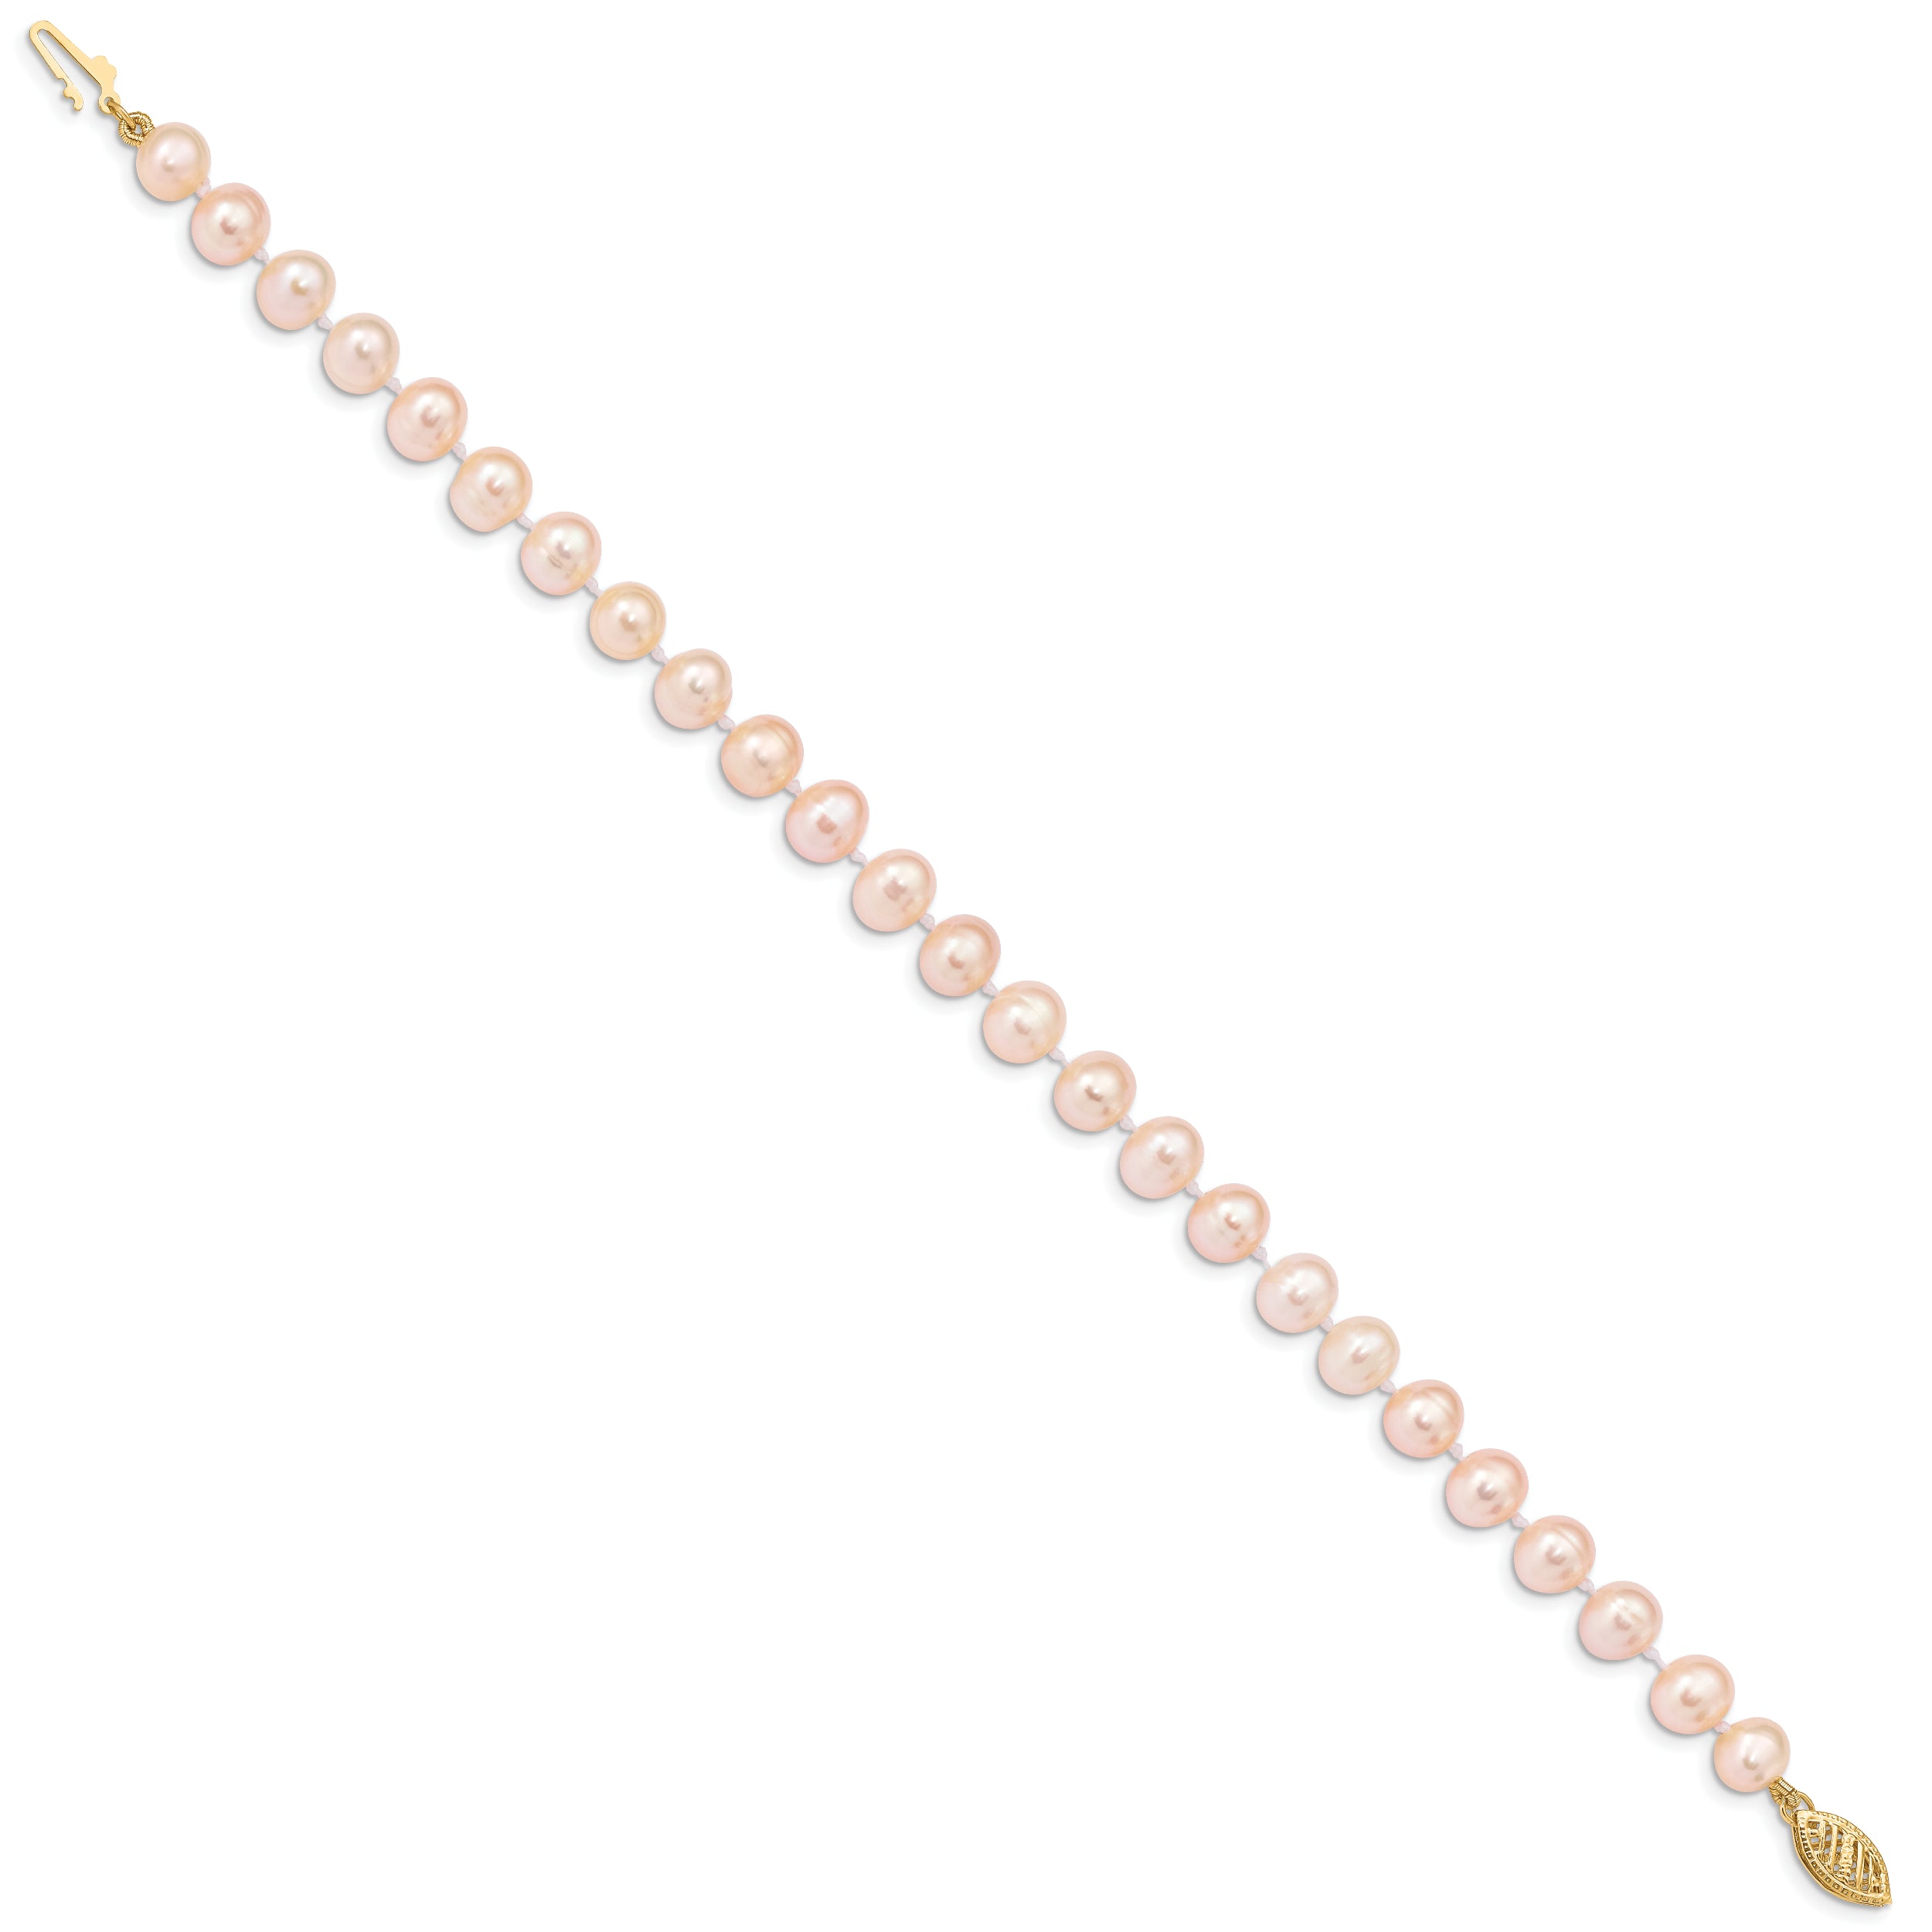 14k 6-7mm Pink Near Round Freshwater Cultured Pearl Bracelet